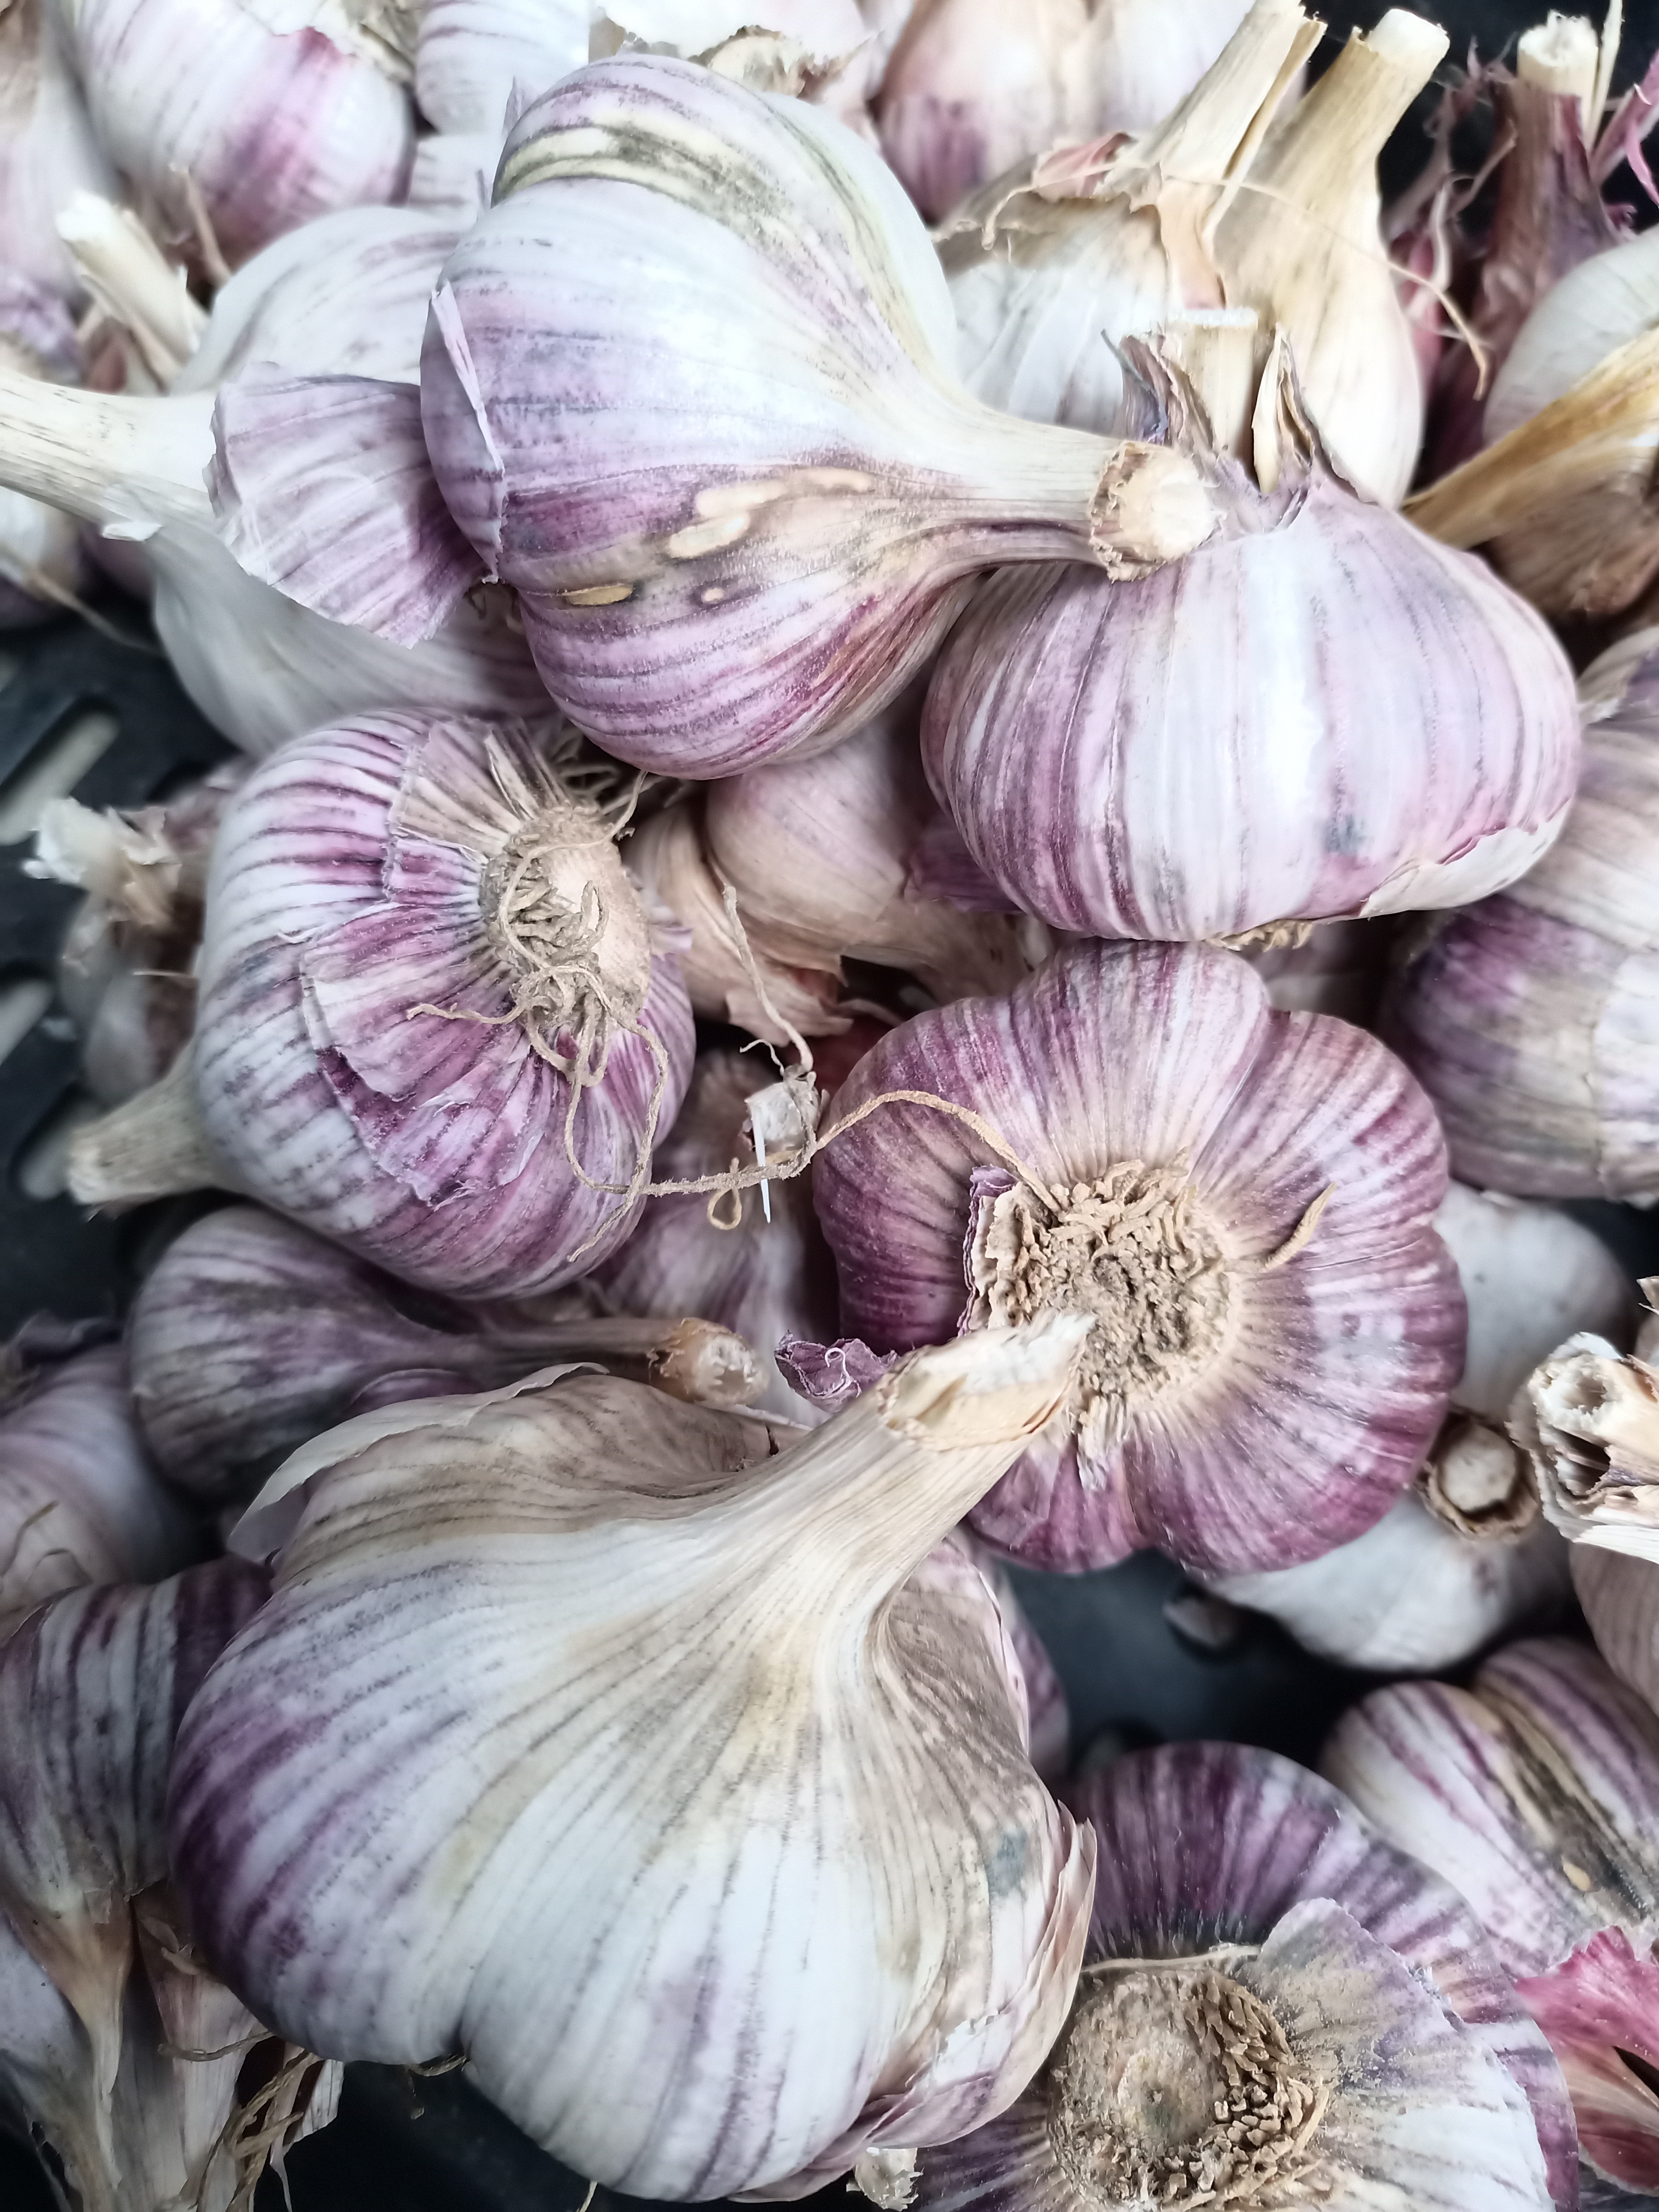 Planting Garlic - Red Czech hardneck garlic